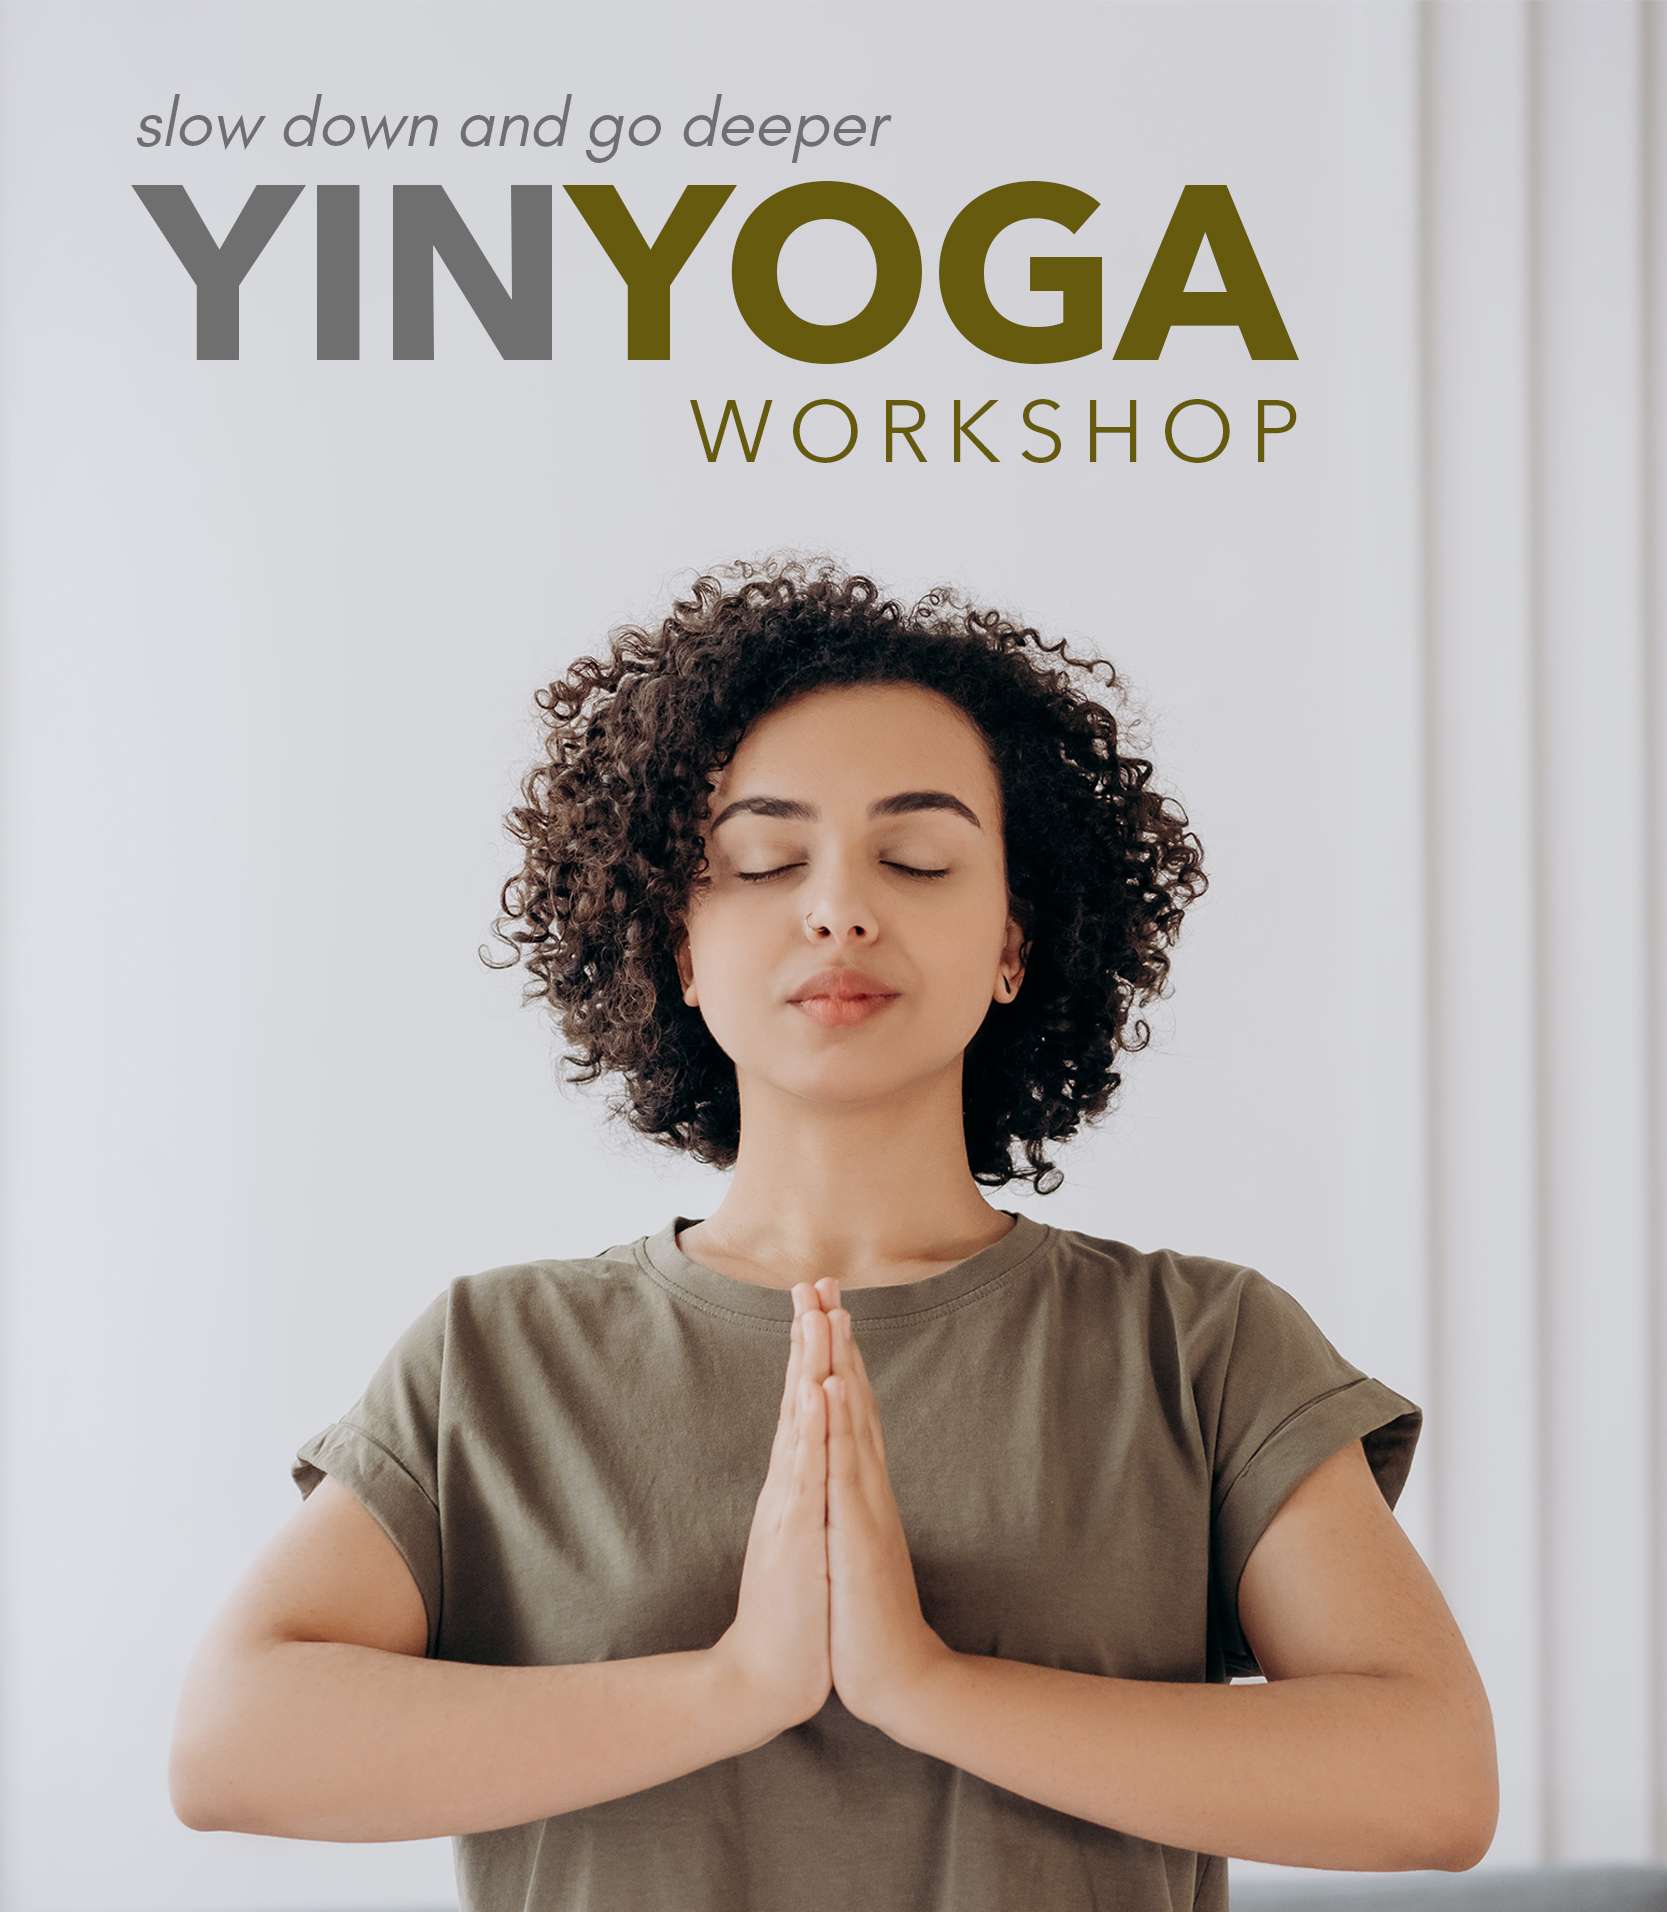 Yin Yoga for beginners & a lesson in Yin & Yang - Yogashop